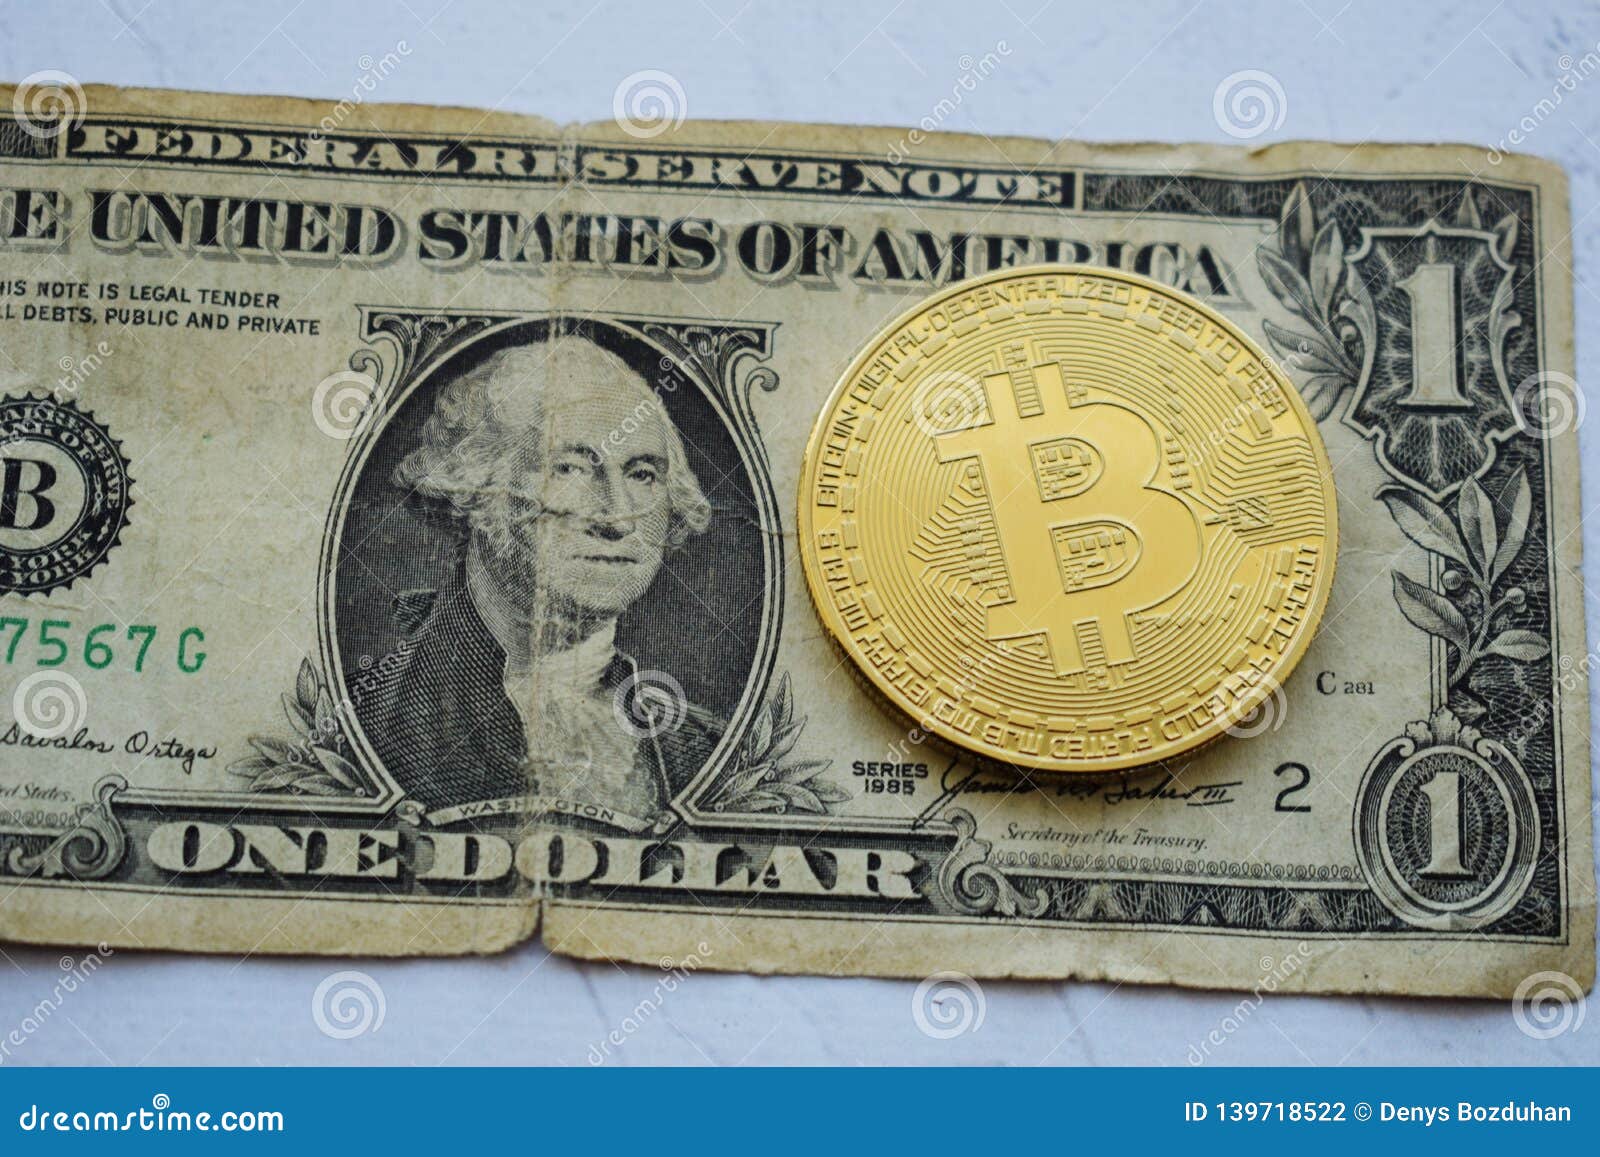 1 bitcoin to a us dollar